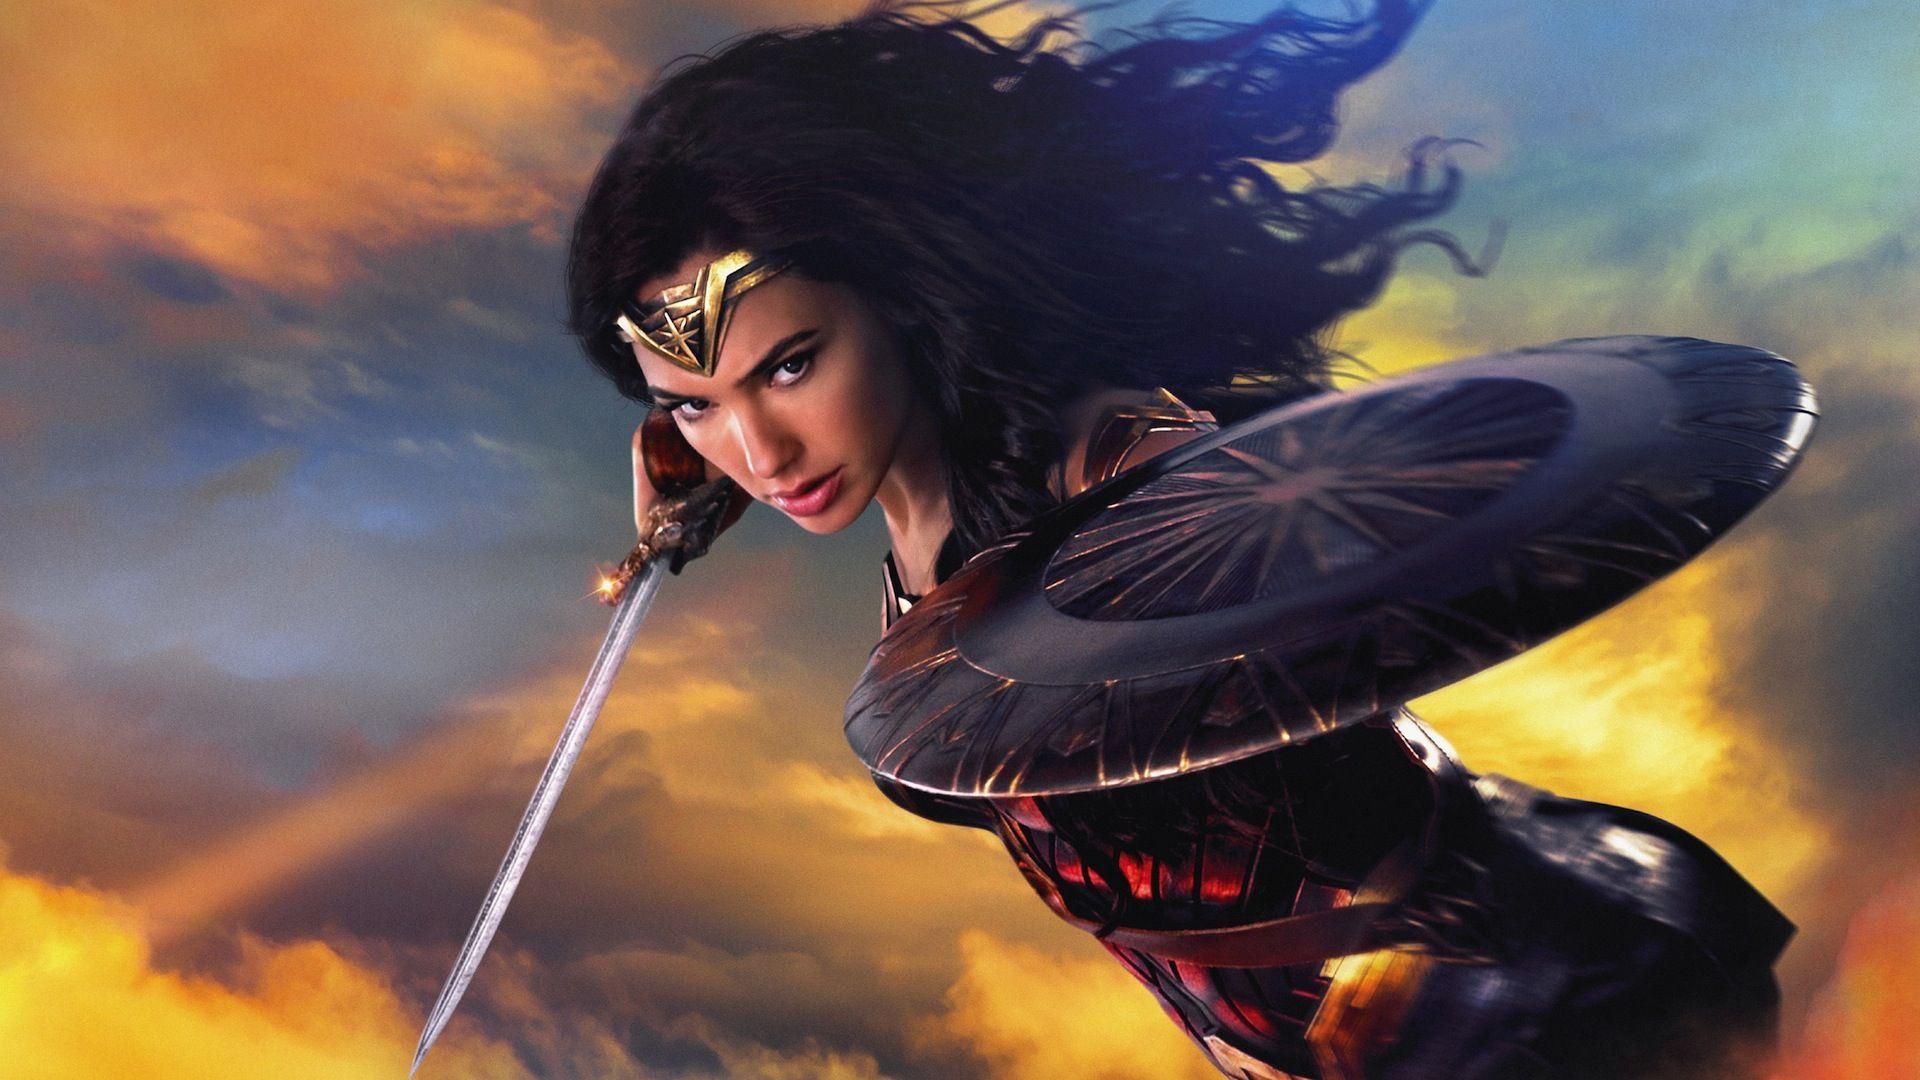 Wonder Woman 2 Wallpapers - Top Free Wonder Woman 2 Backgrounds ...